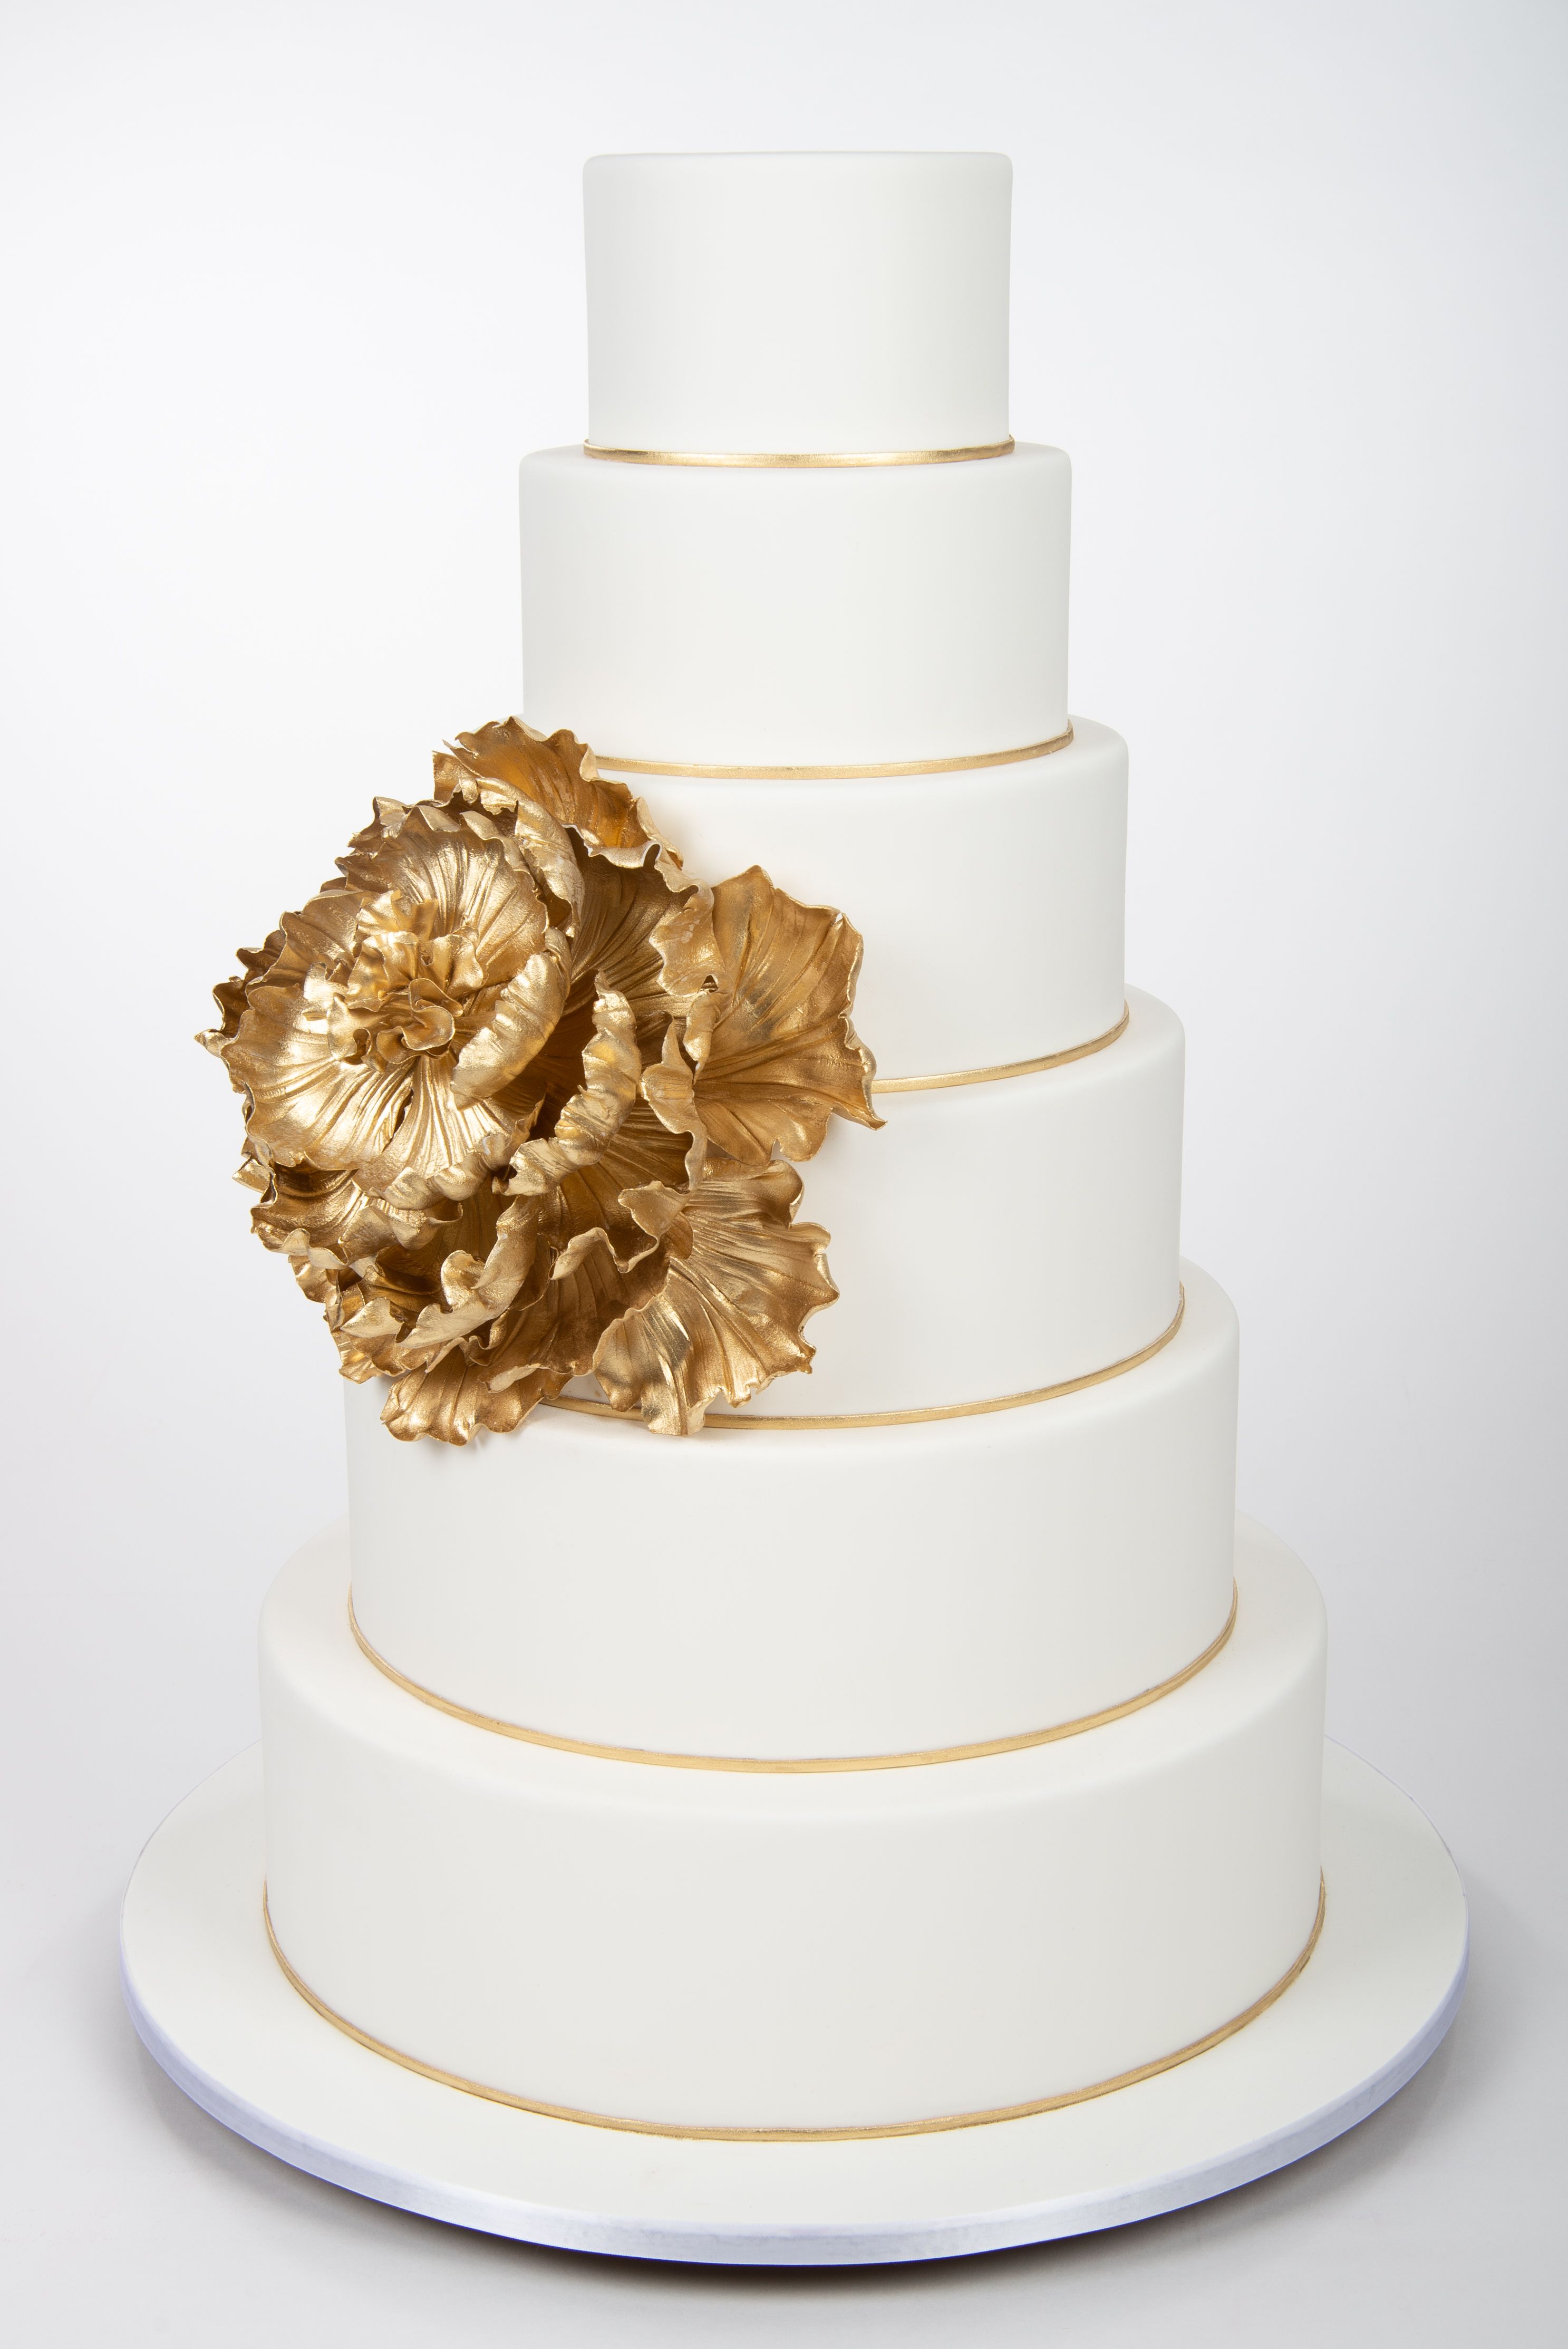 20 Wedding Cake Ideas - 20 Tips to Choosing Your Wedding Cake